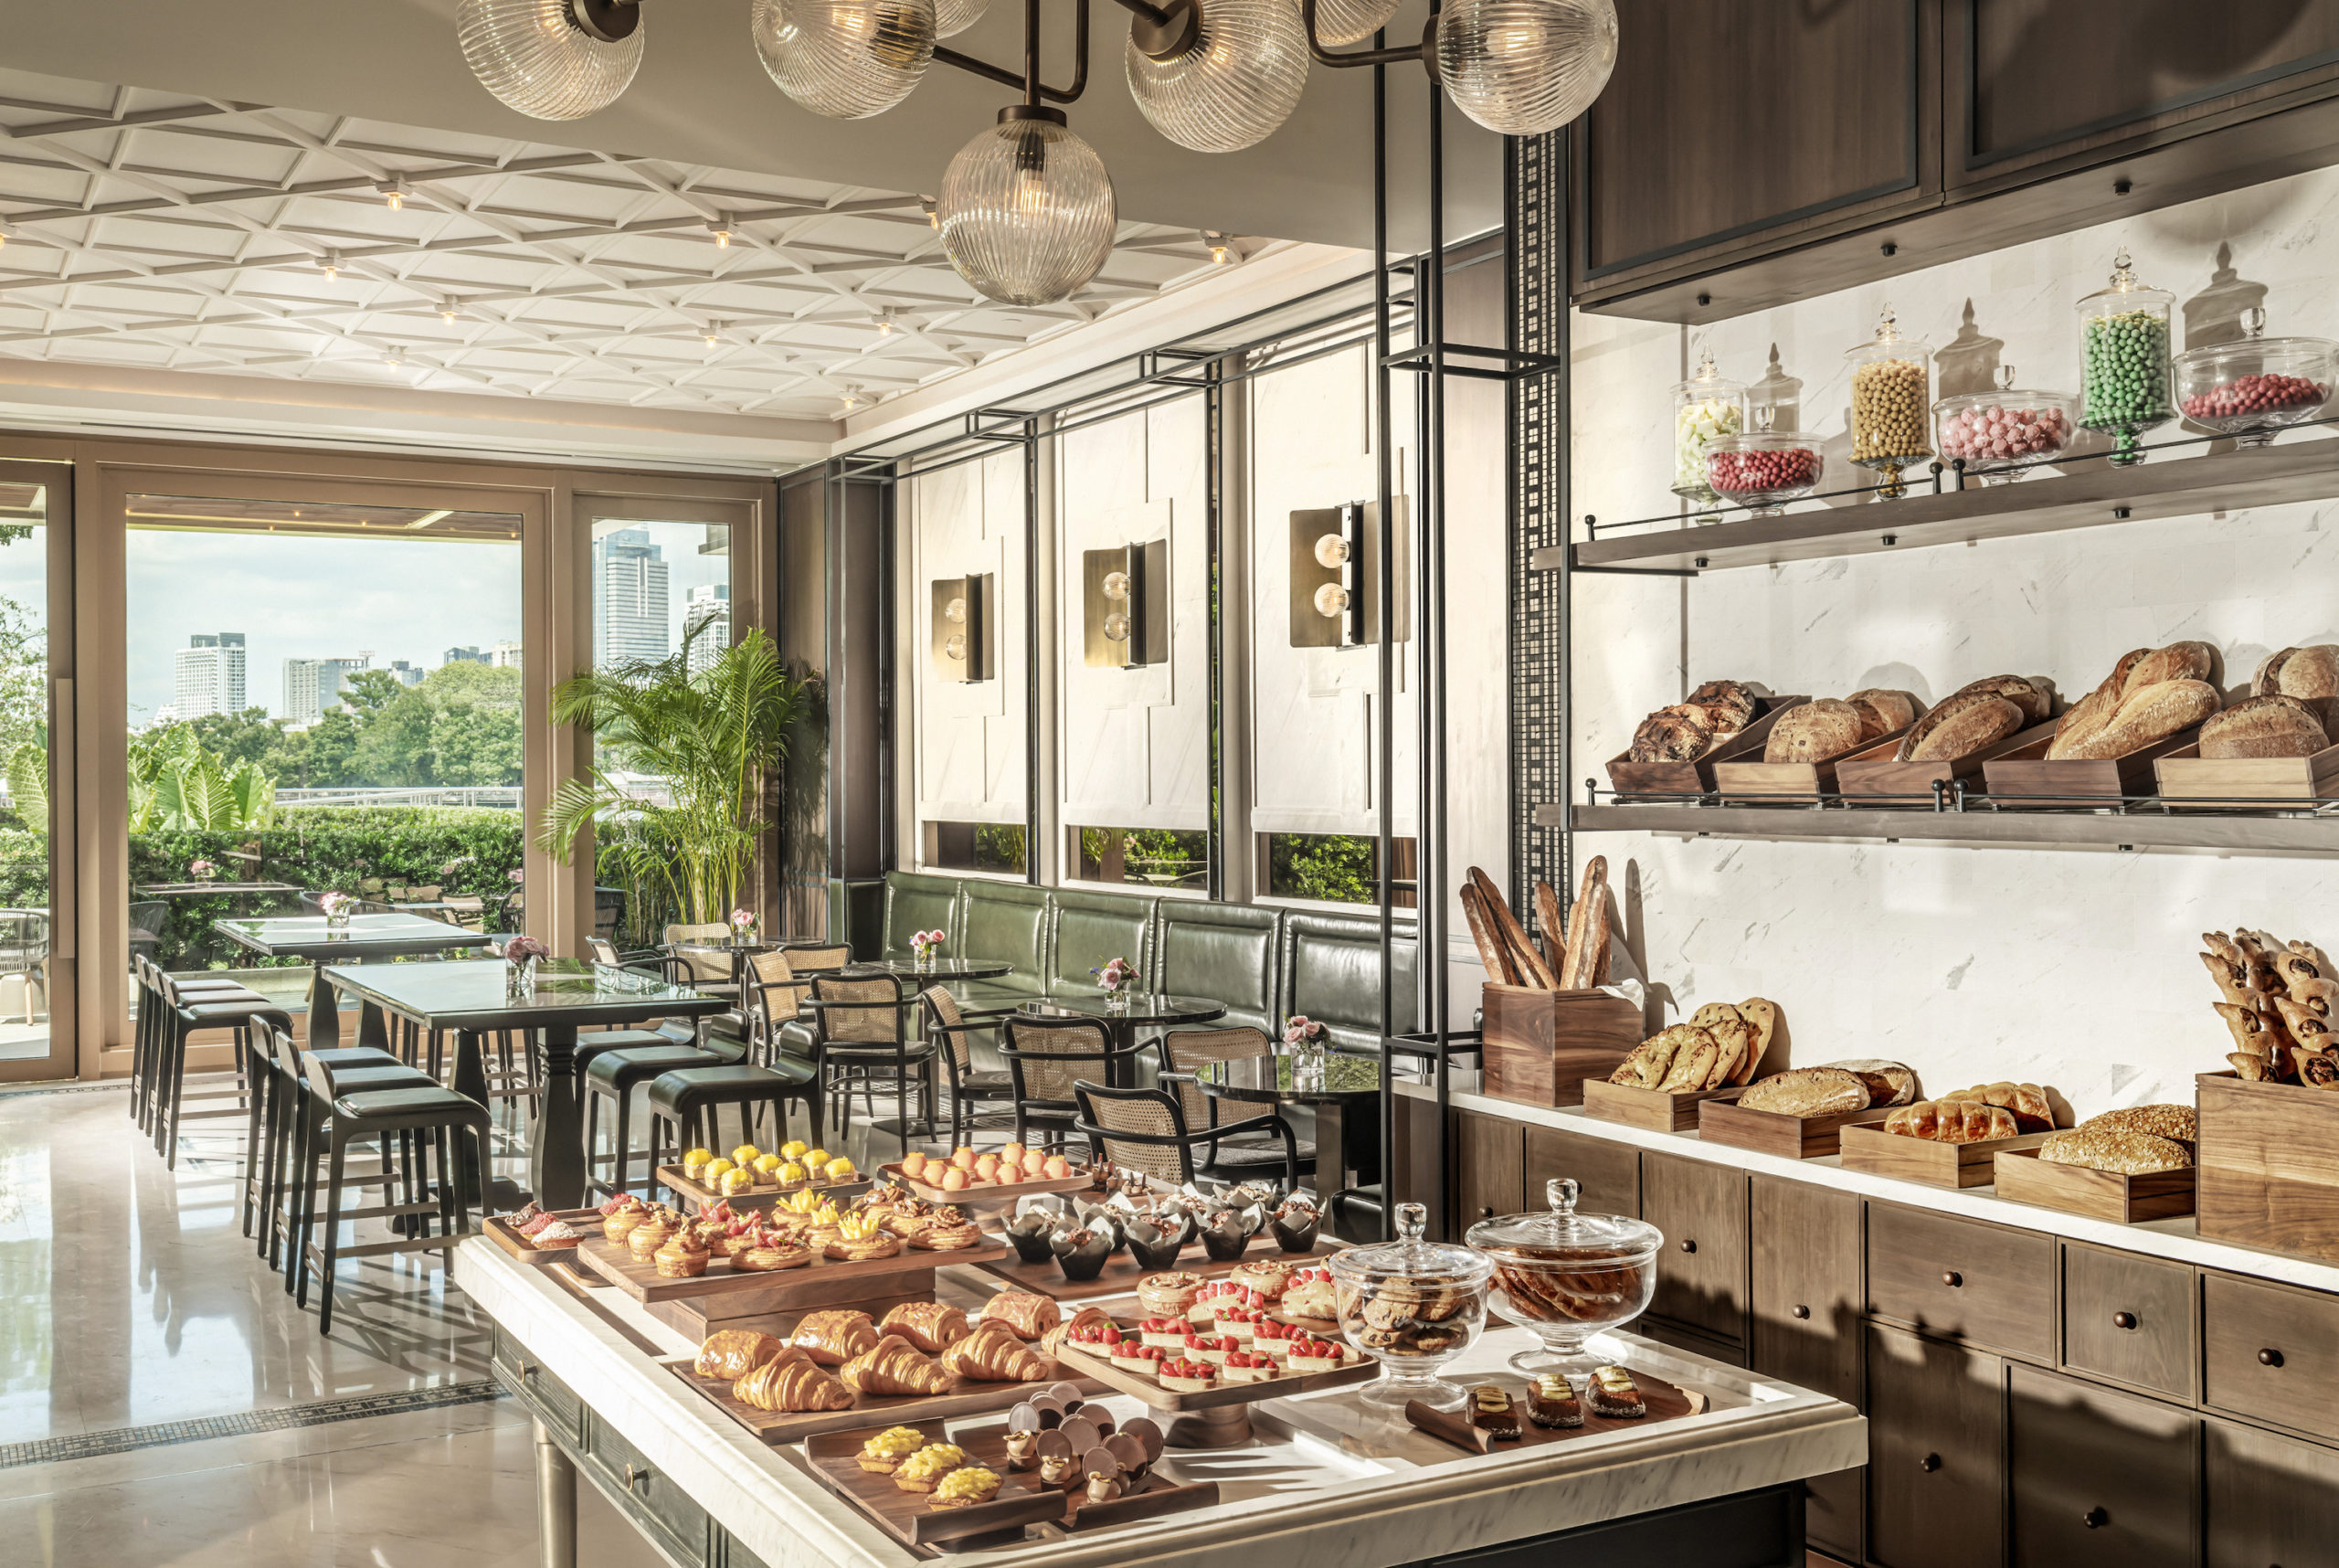 Introducing Cafe Madeleine: An Artisanal Riverside Neighbourhood Pastry Shop from Four Seasons Hotel Bangkok